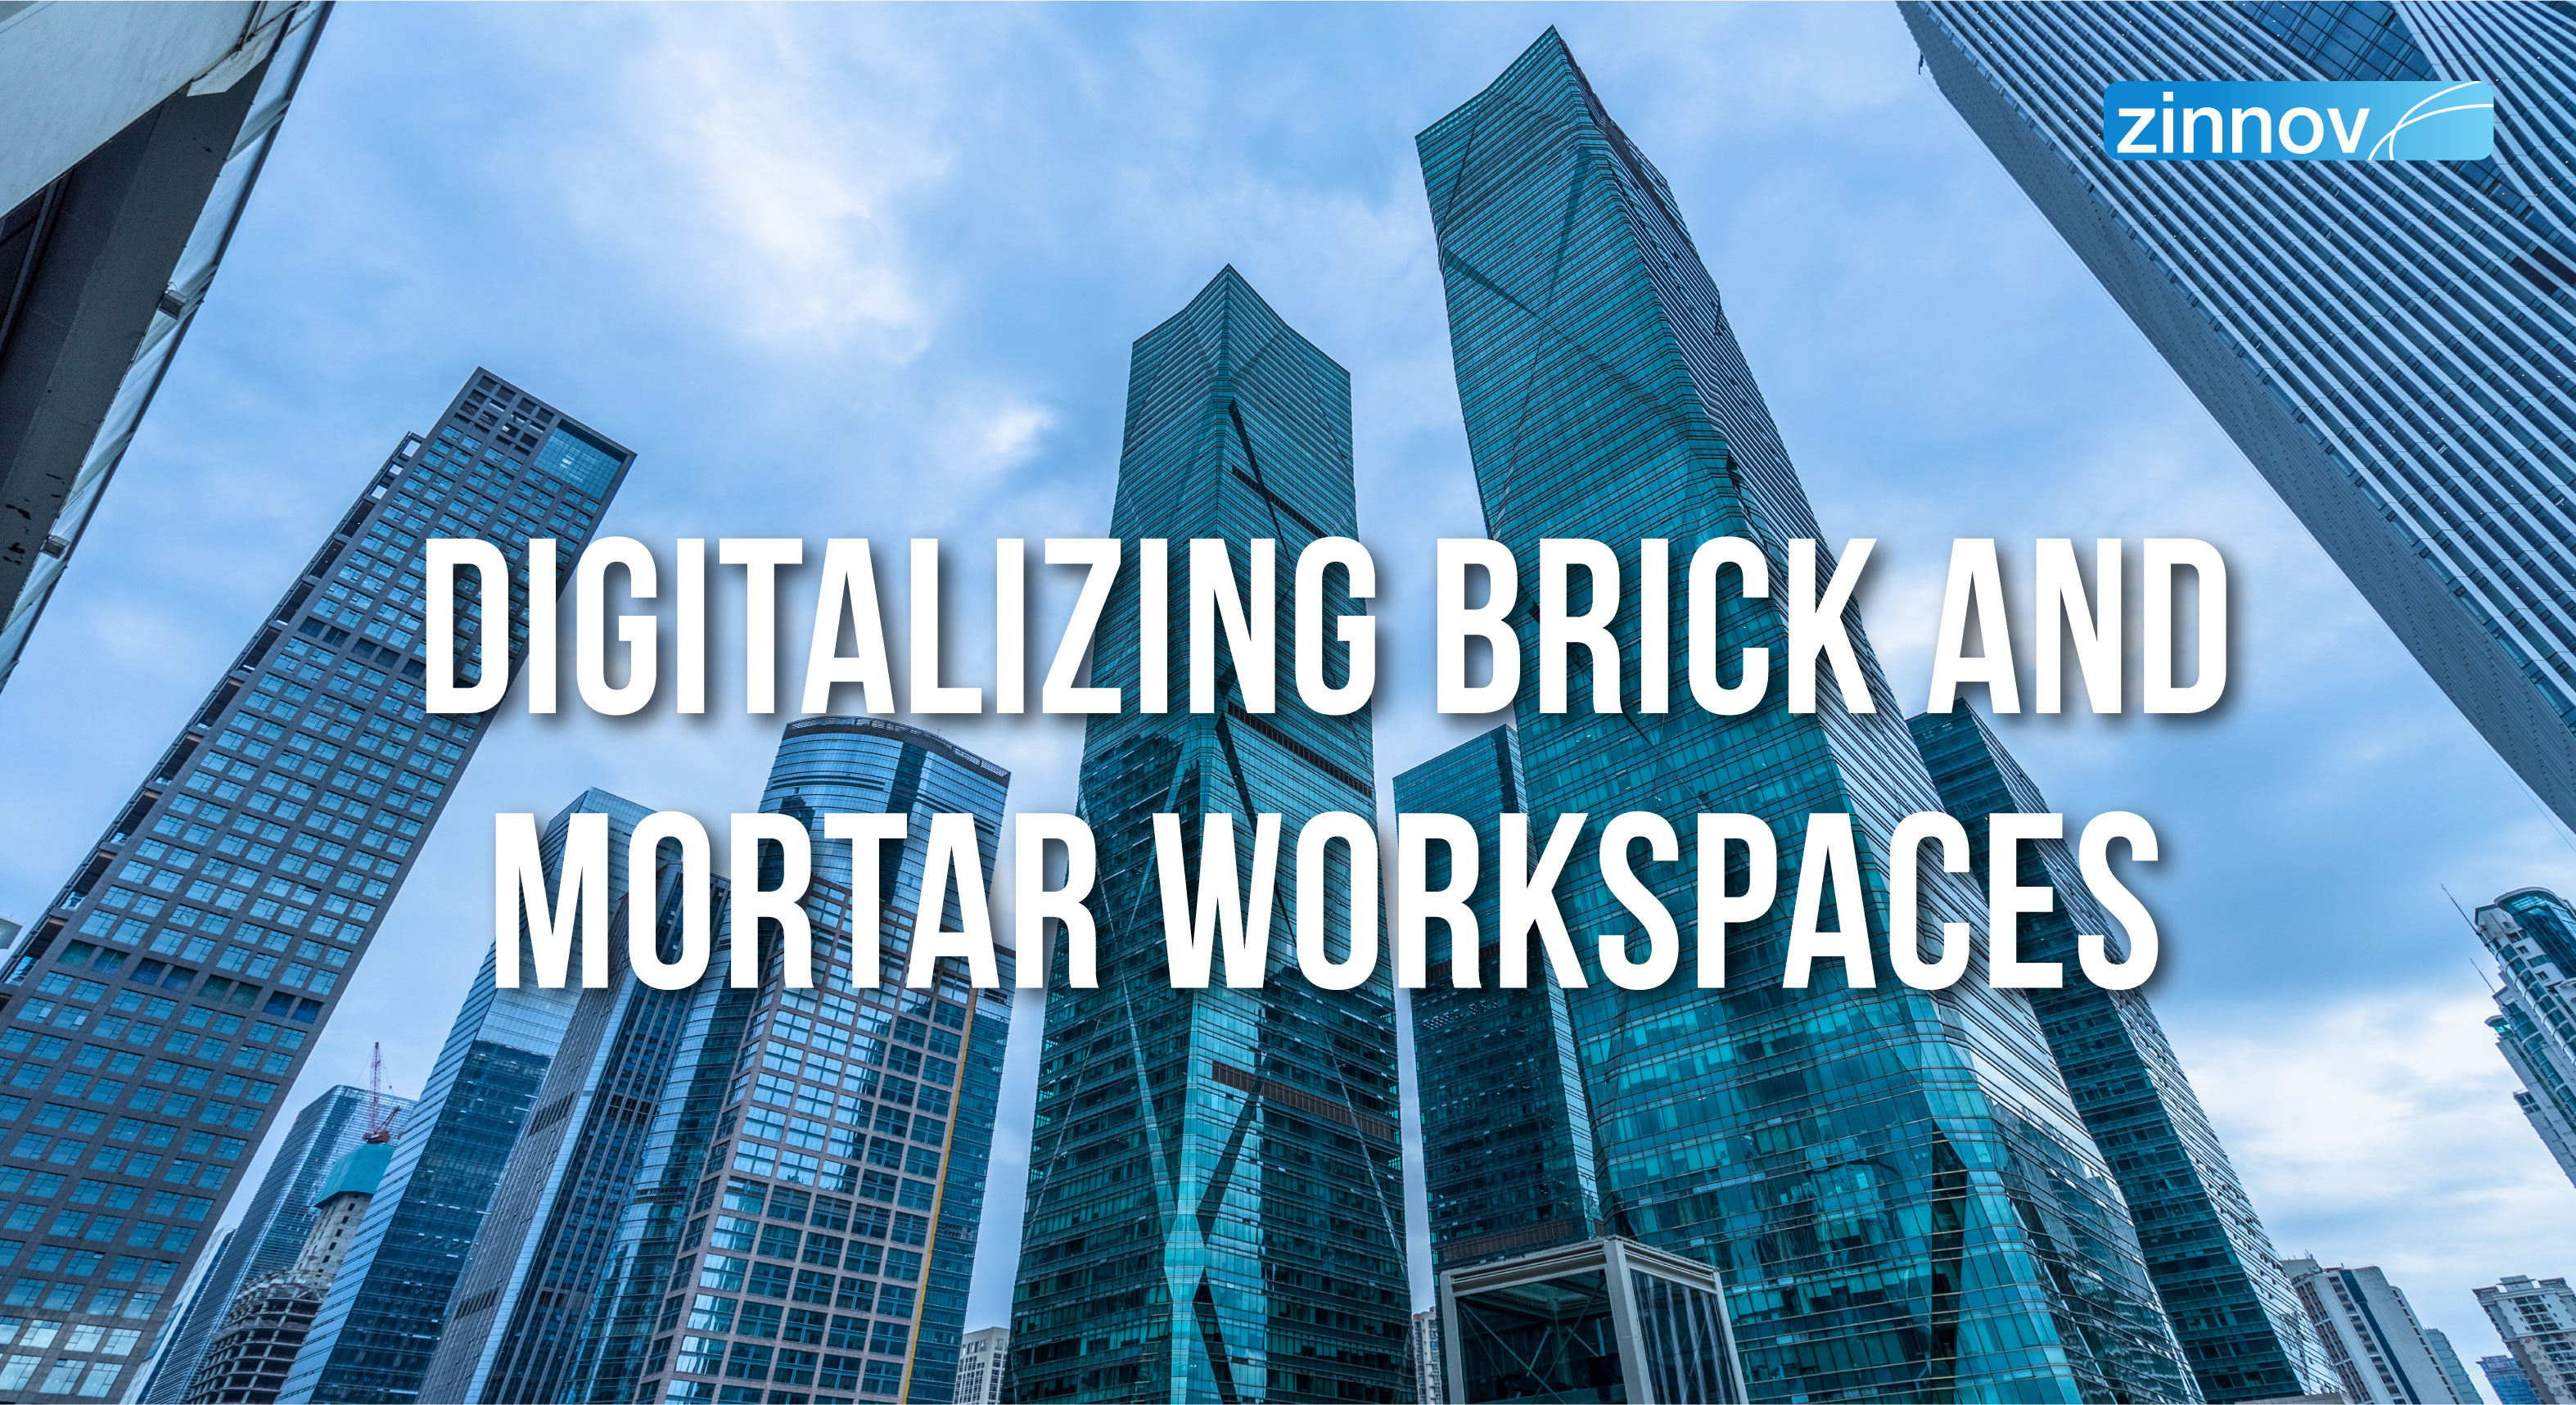 Digitalizing brick and mortar workspaces